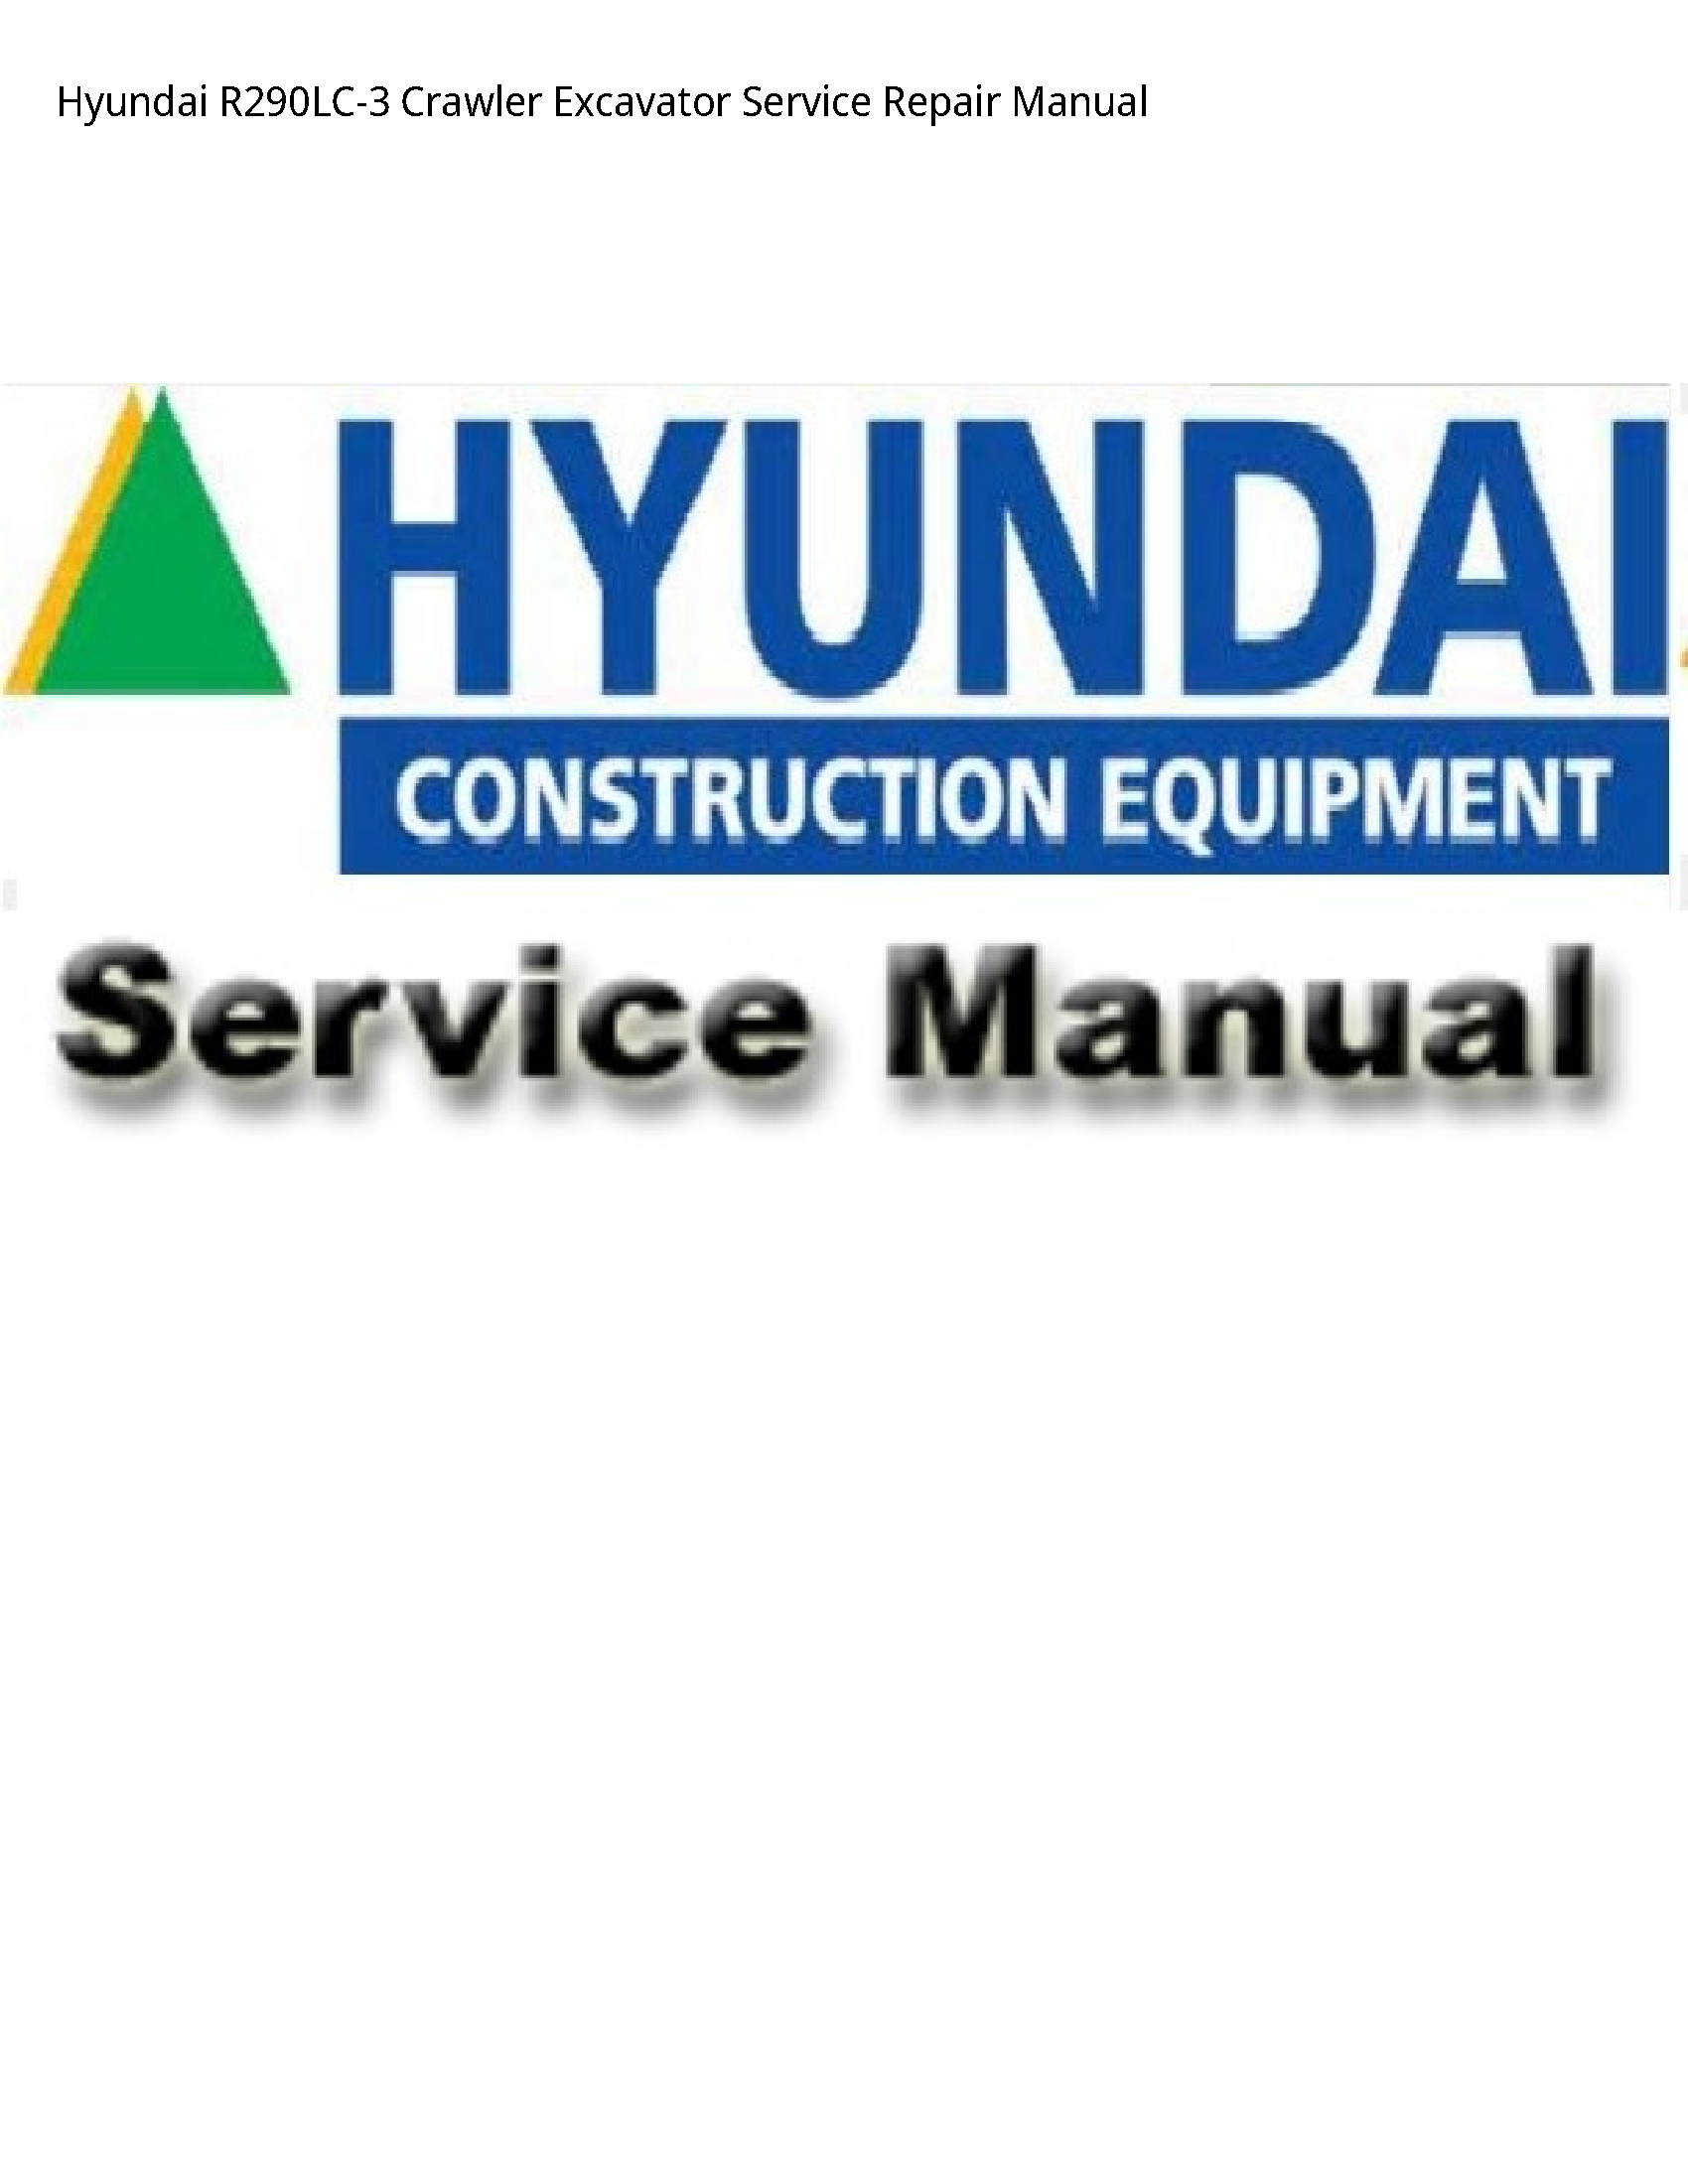 Hyundai R290LC-3 Crawler Excavator manual